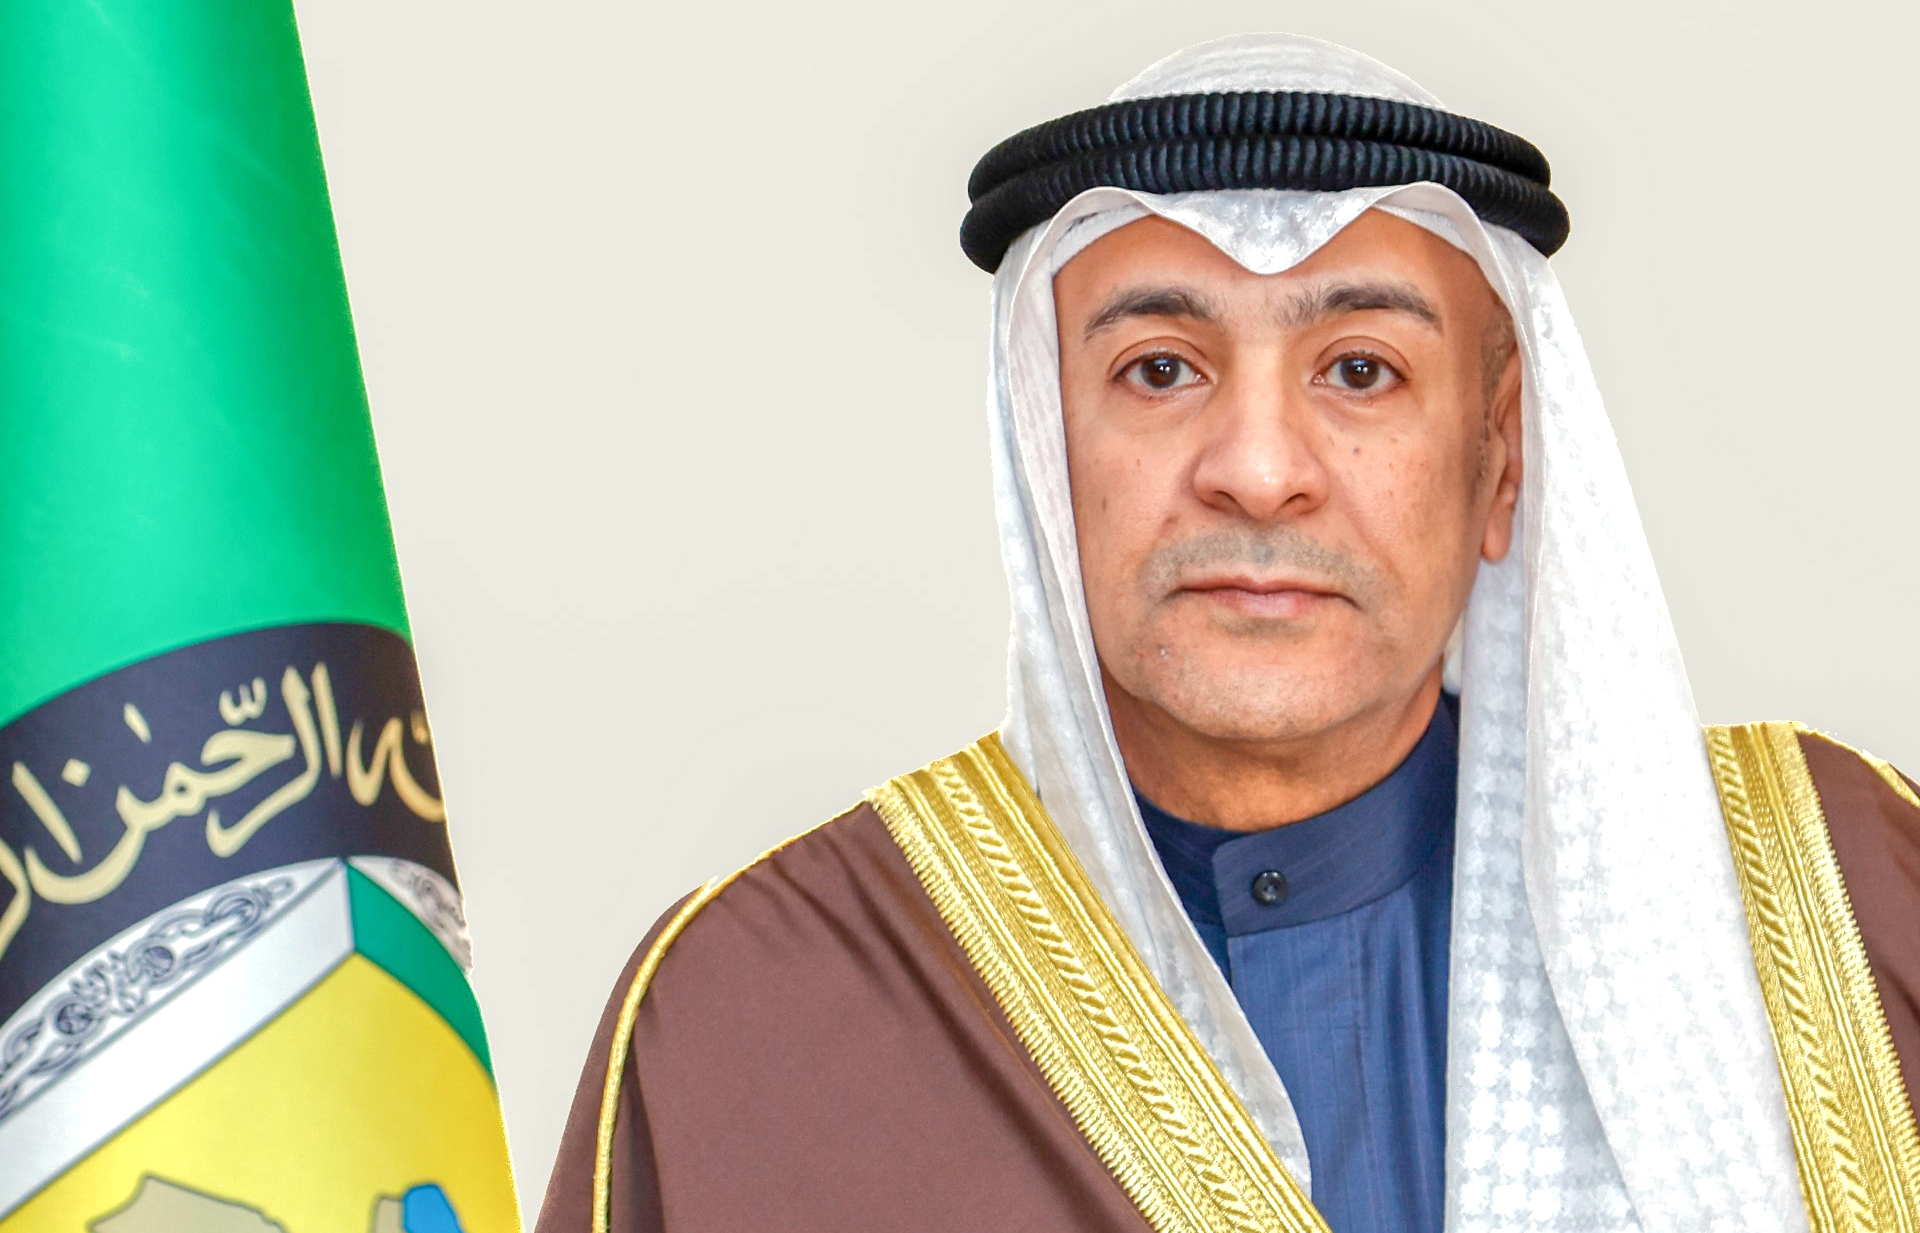 GCC Secretary General Jassem Al-Budaiwi